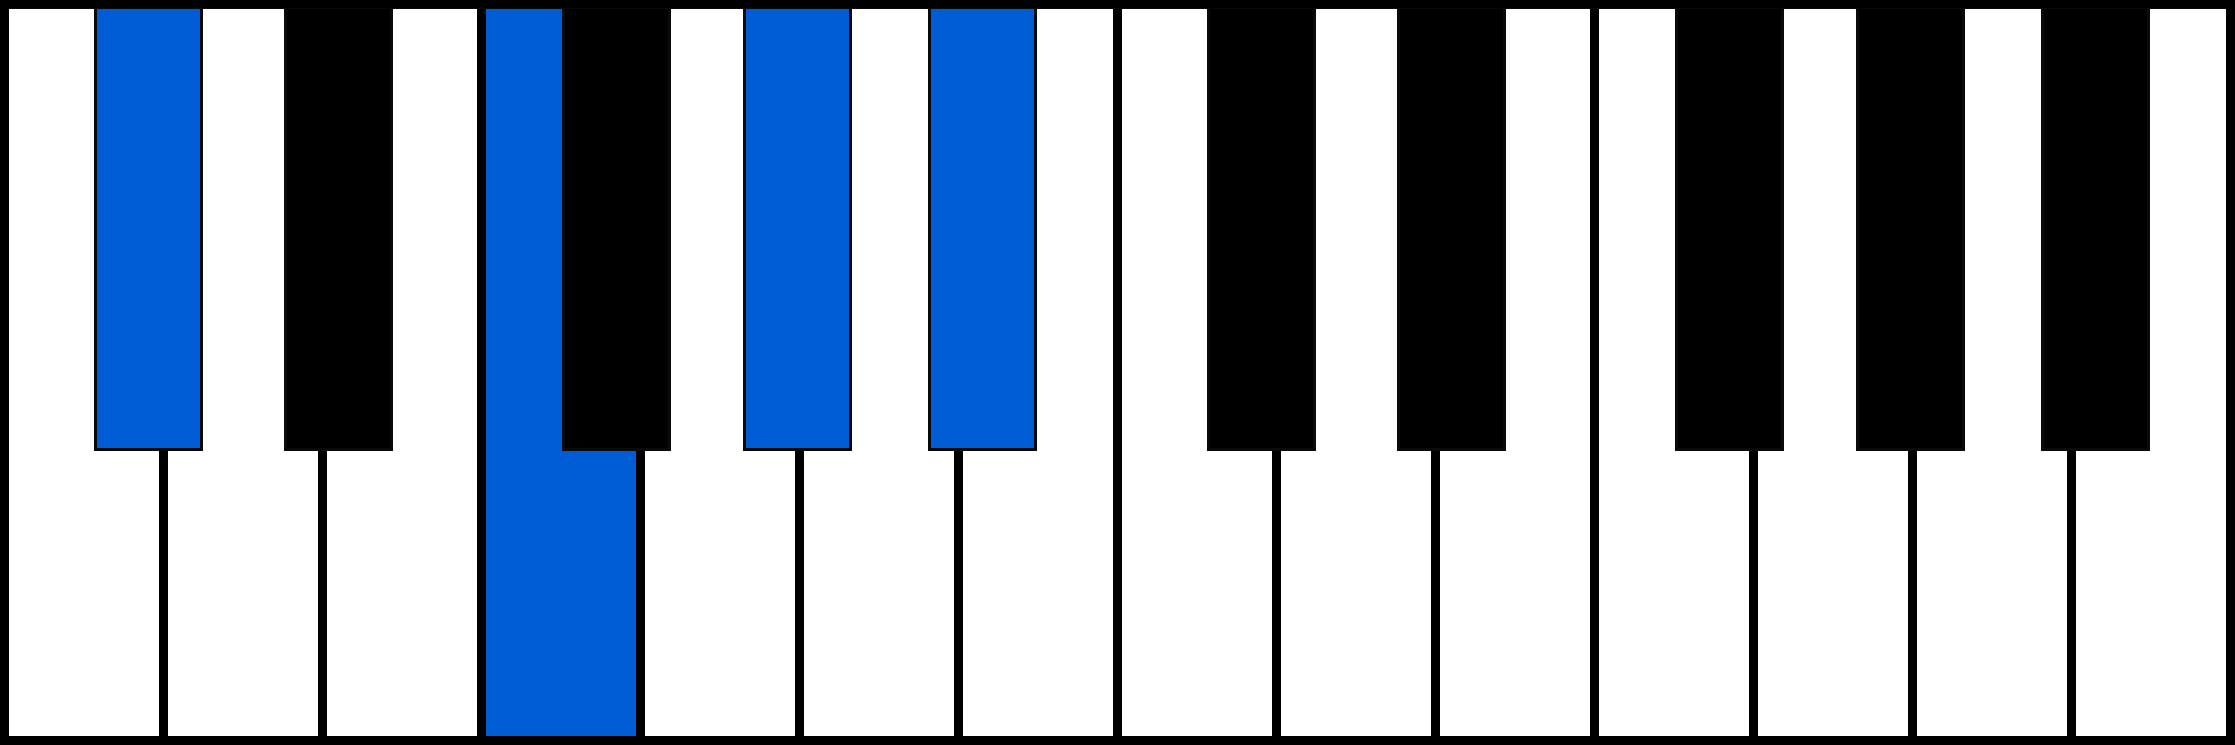 C#6 piano chord fingering